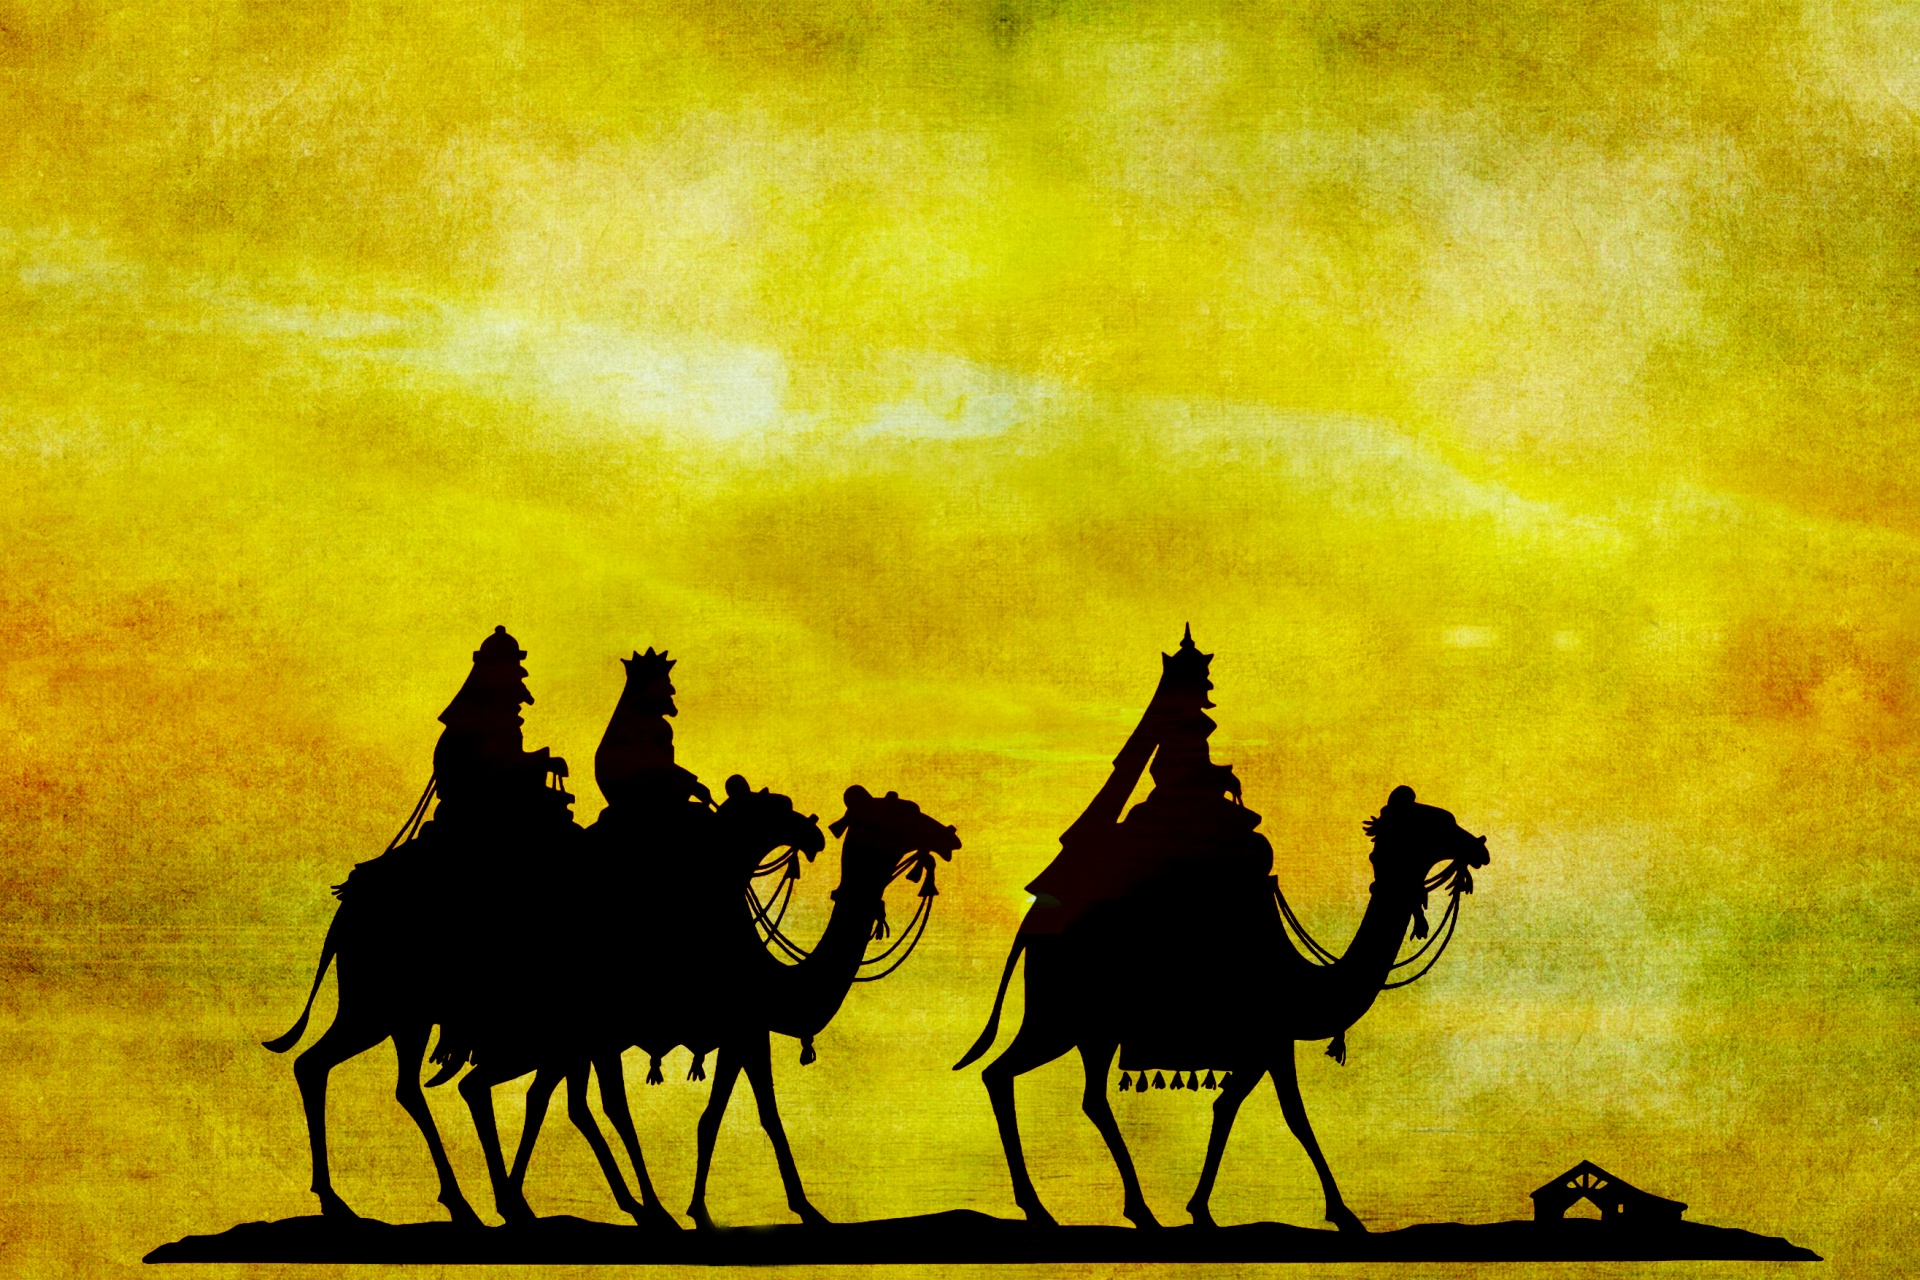 Three wise men,christmas,silhouette,sunset,sunrise - free image from needpix.com